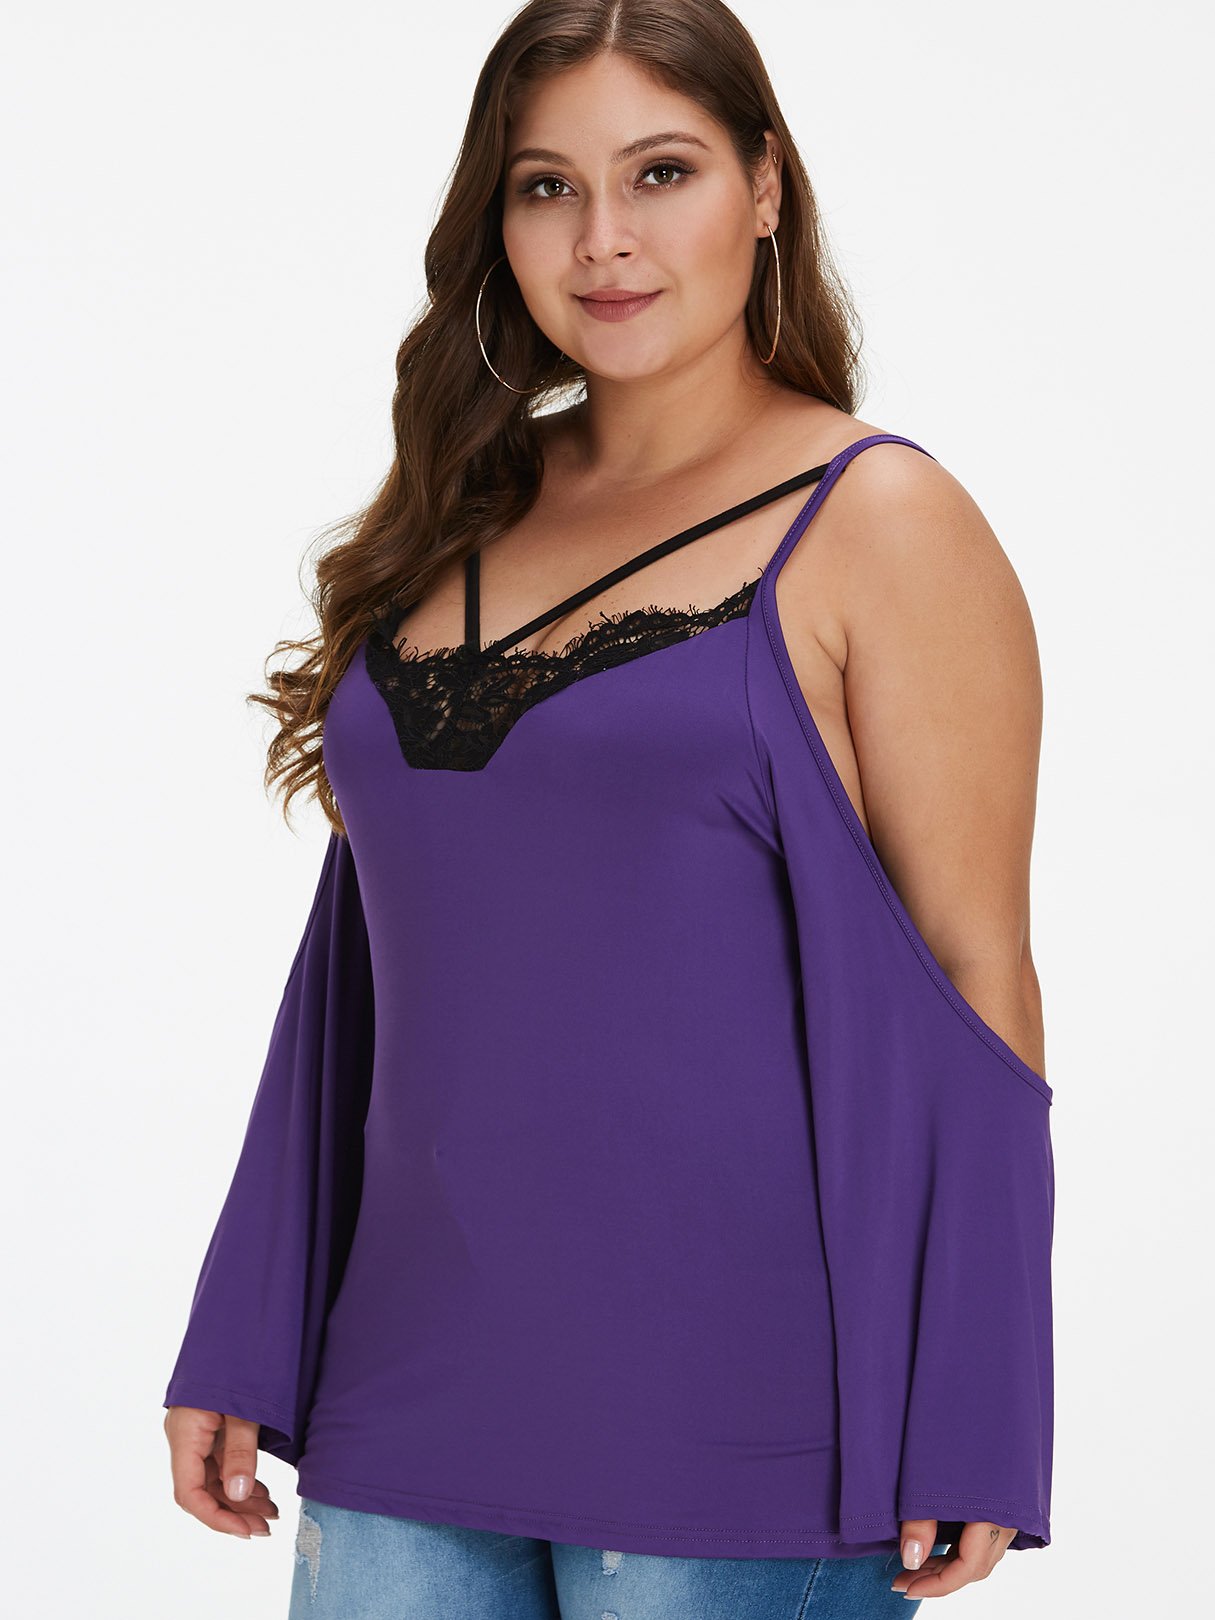 OEM Ladies Purple Plus Size Tops